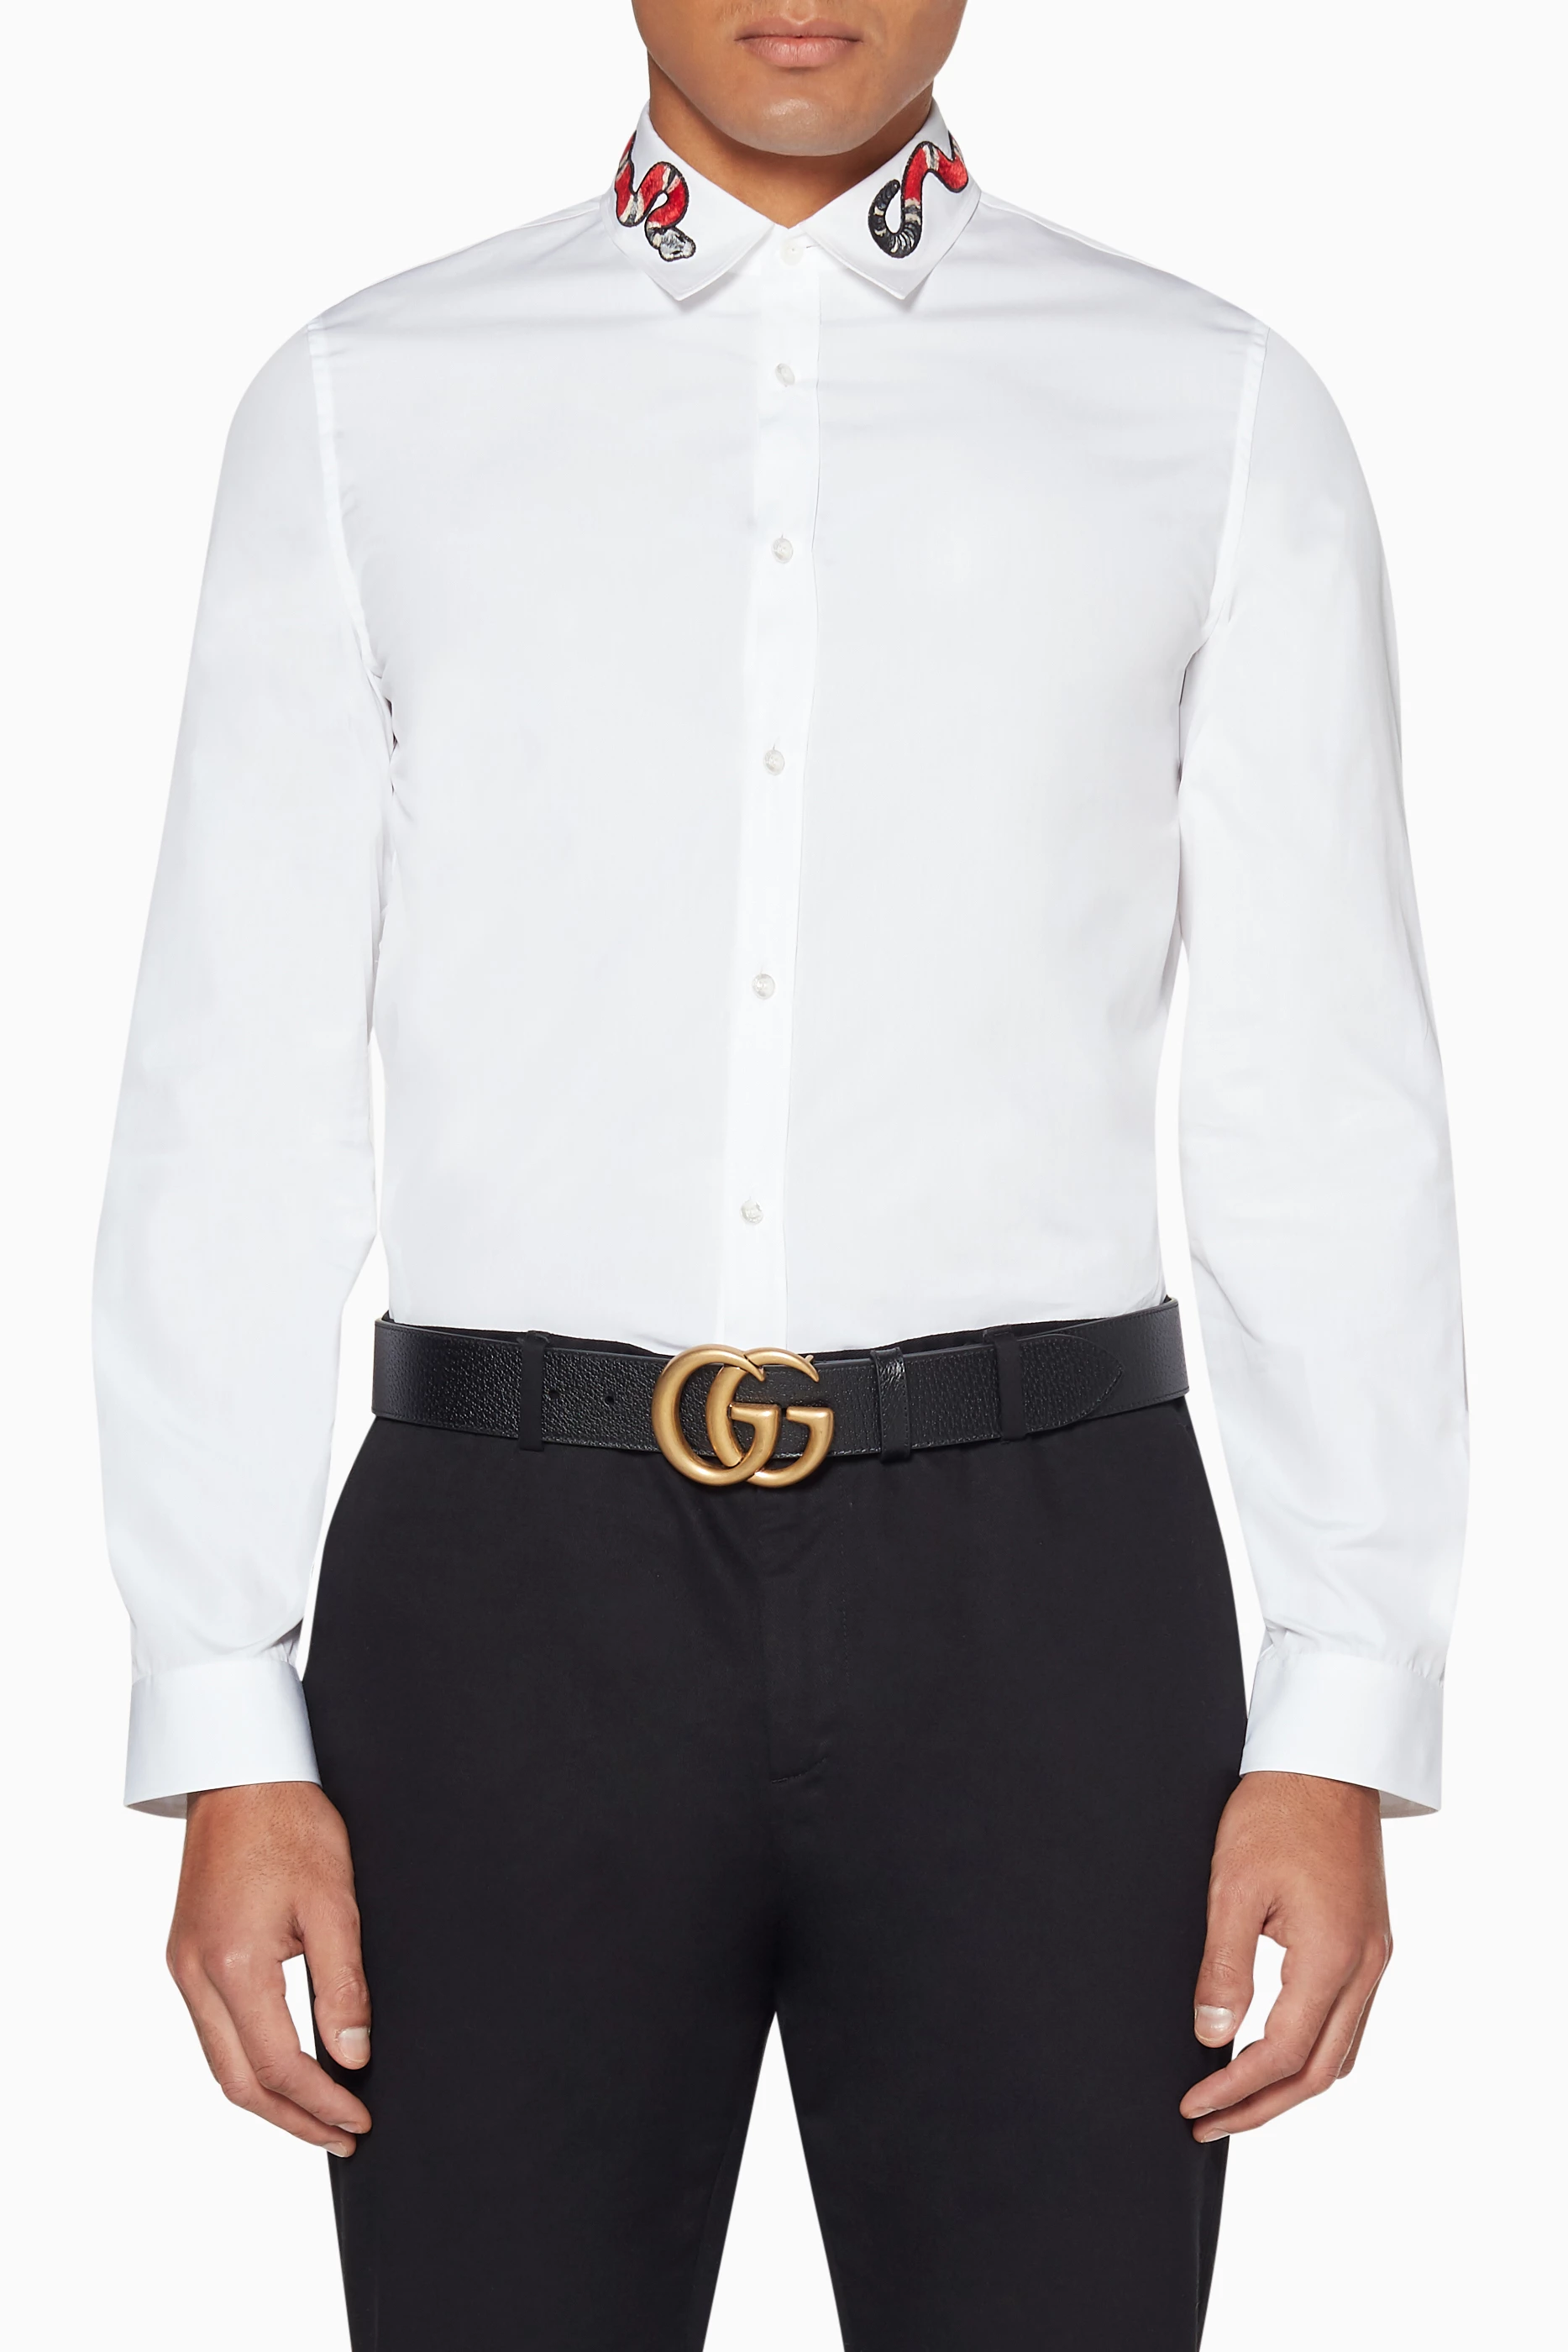 NWT Gucci Kingsnake Snake Iconic White Duke Button Down Dress Shirt Sz 37  14.5